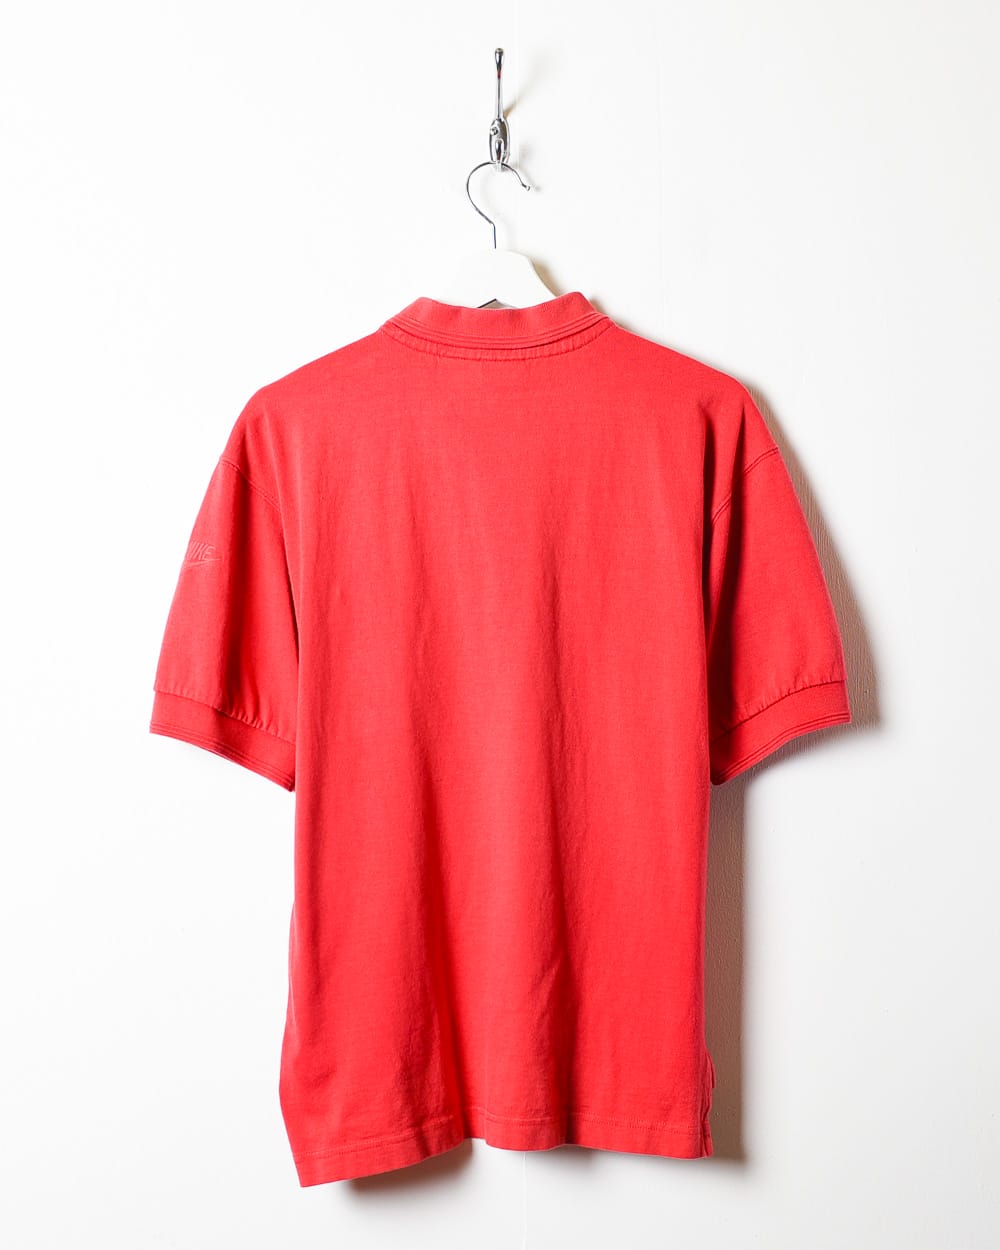 Red Nike Air Jordan Polo Shirt - Small